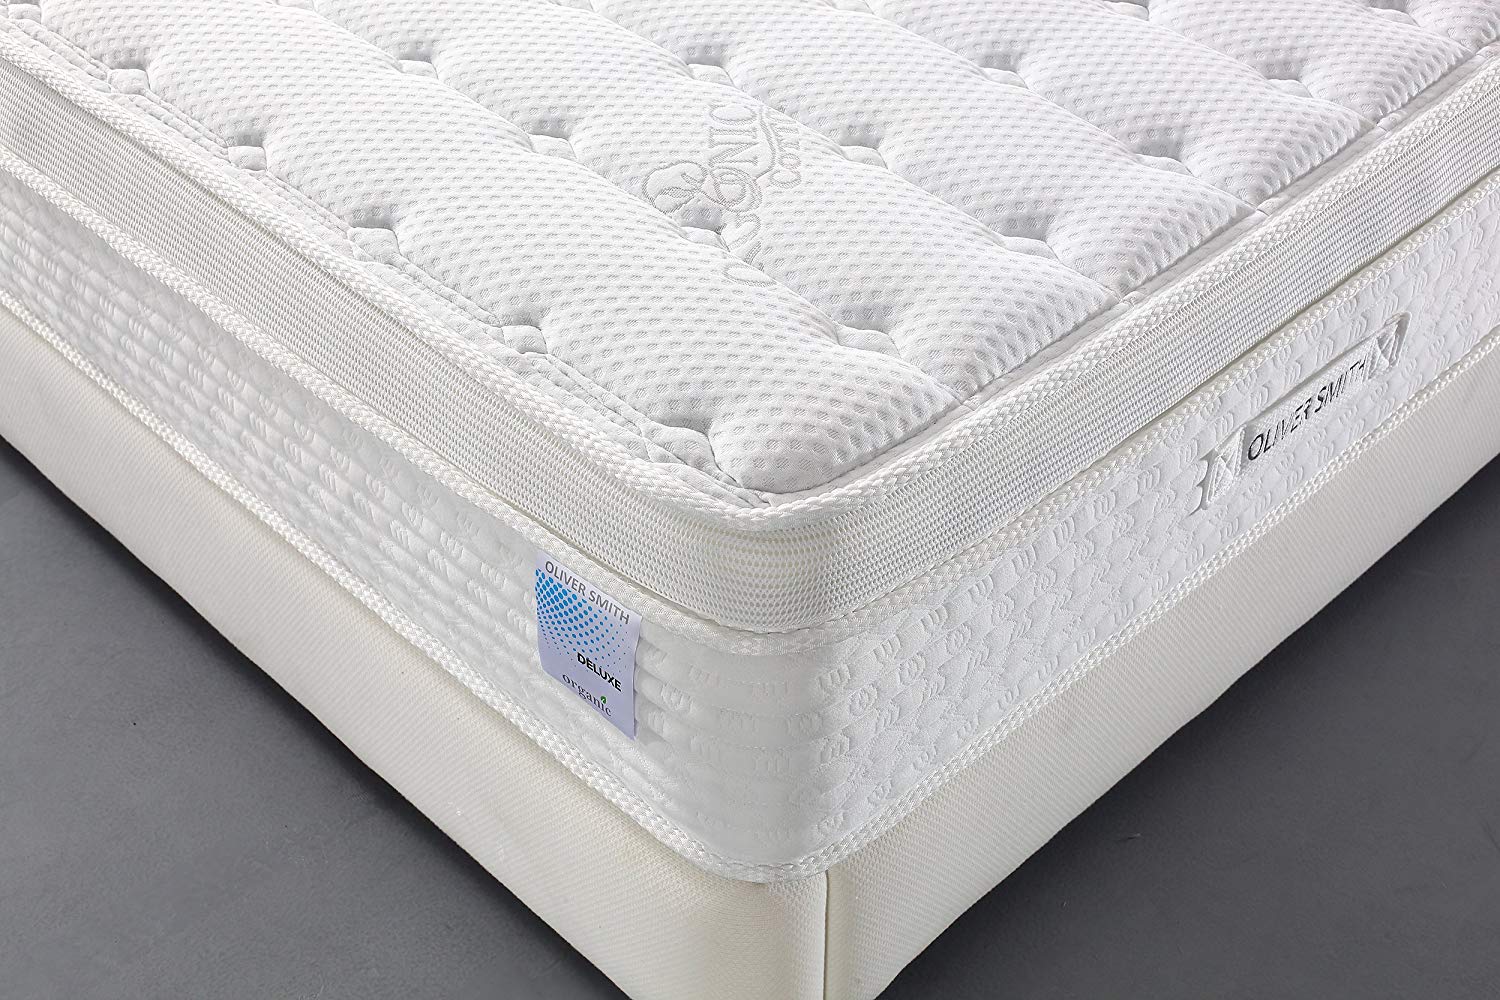 Oliver Smith - Organic Cotton - 12 Inch - Deluxe Sleep - Plush Euro Pillow Top - Cool Memory Foam & Pocket Spring Mattress - Green Foam Certified - Queen